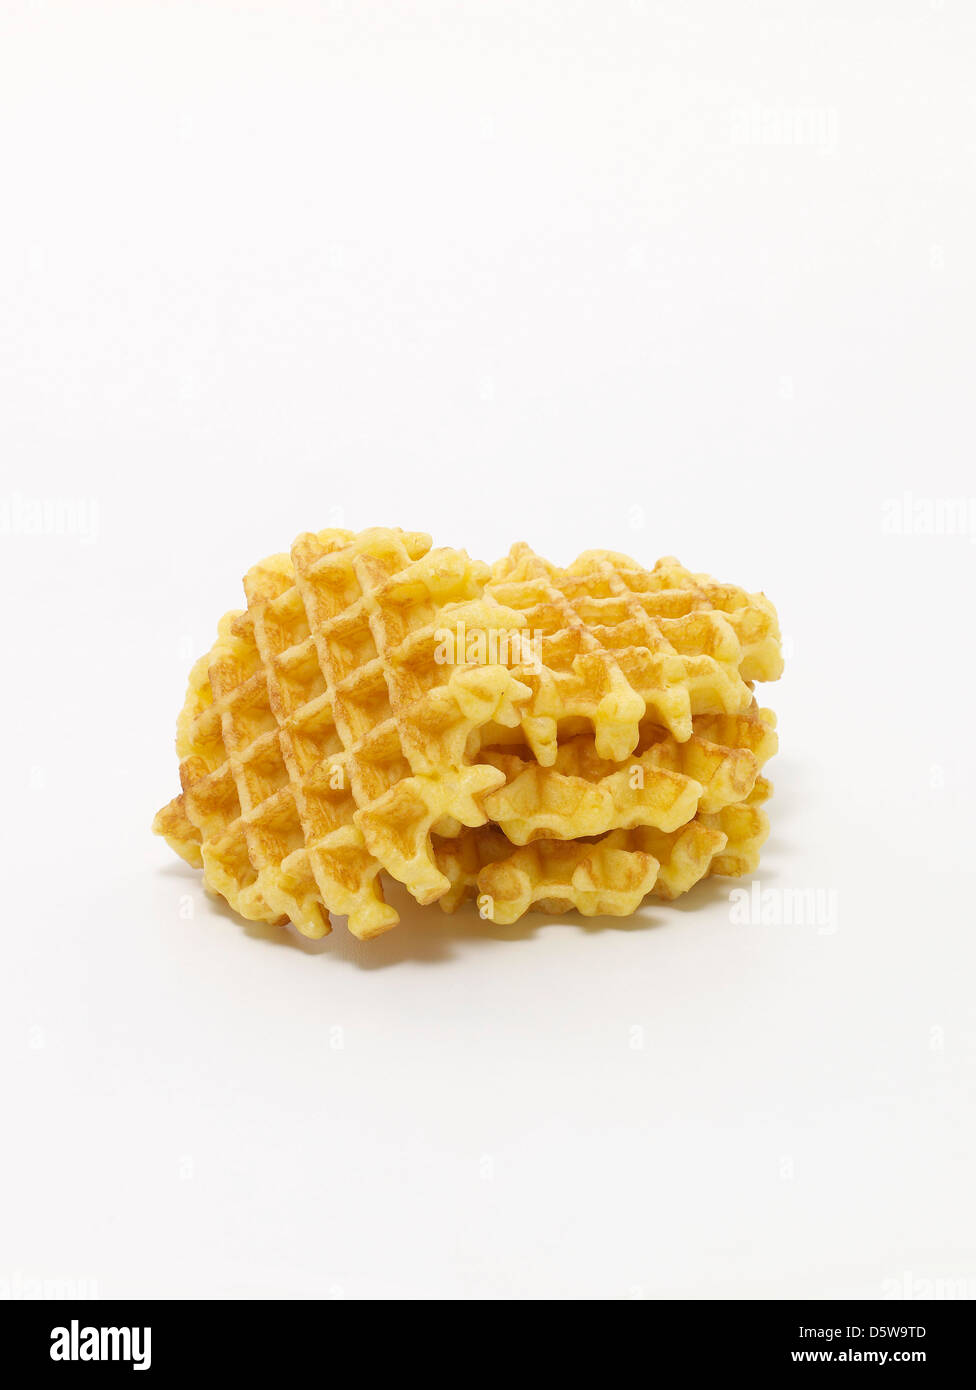 Belgium Waffles on a white background Stock Photo